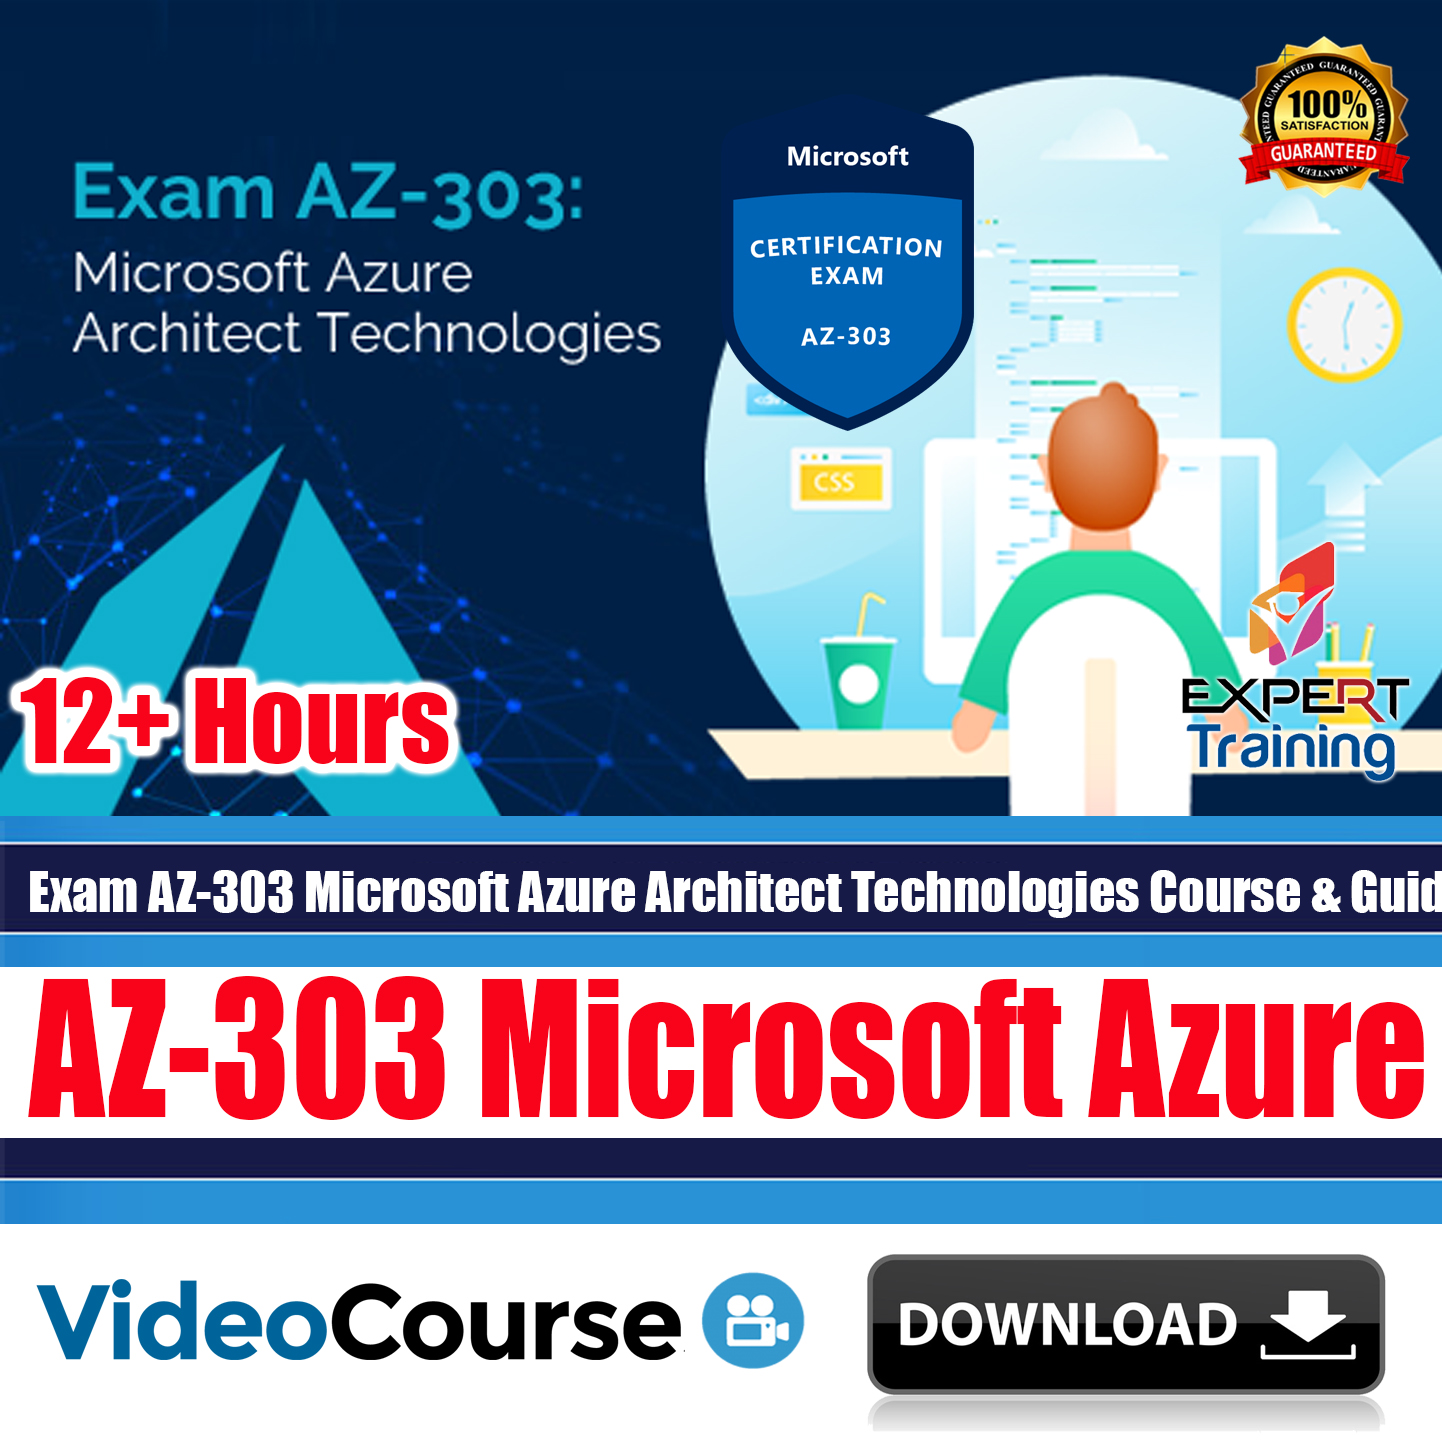 Exam AZ-303 Microsoft Azure Architect Technologies Course & Guides